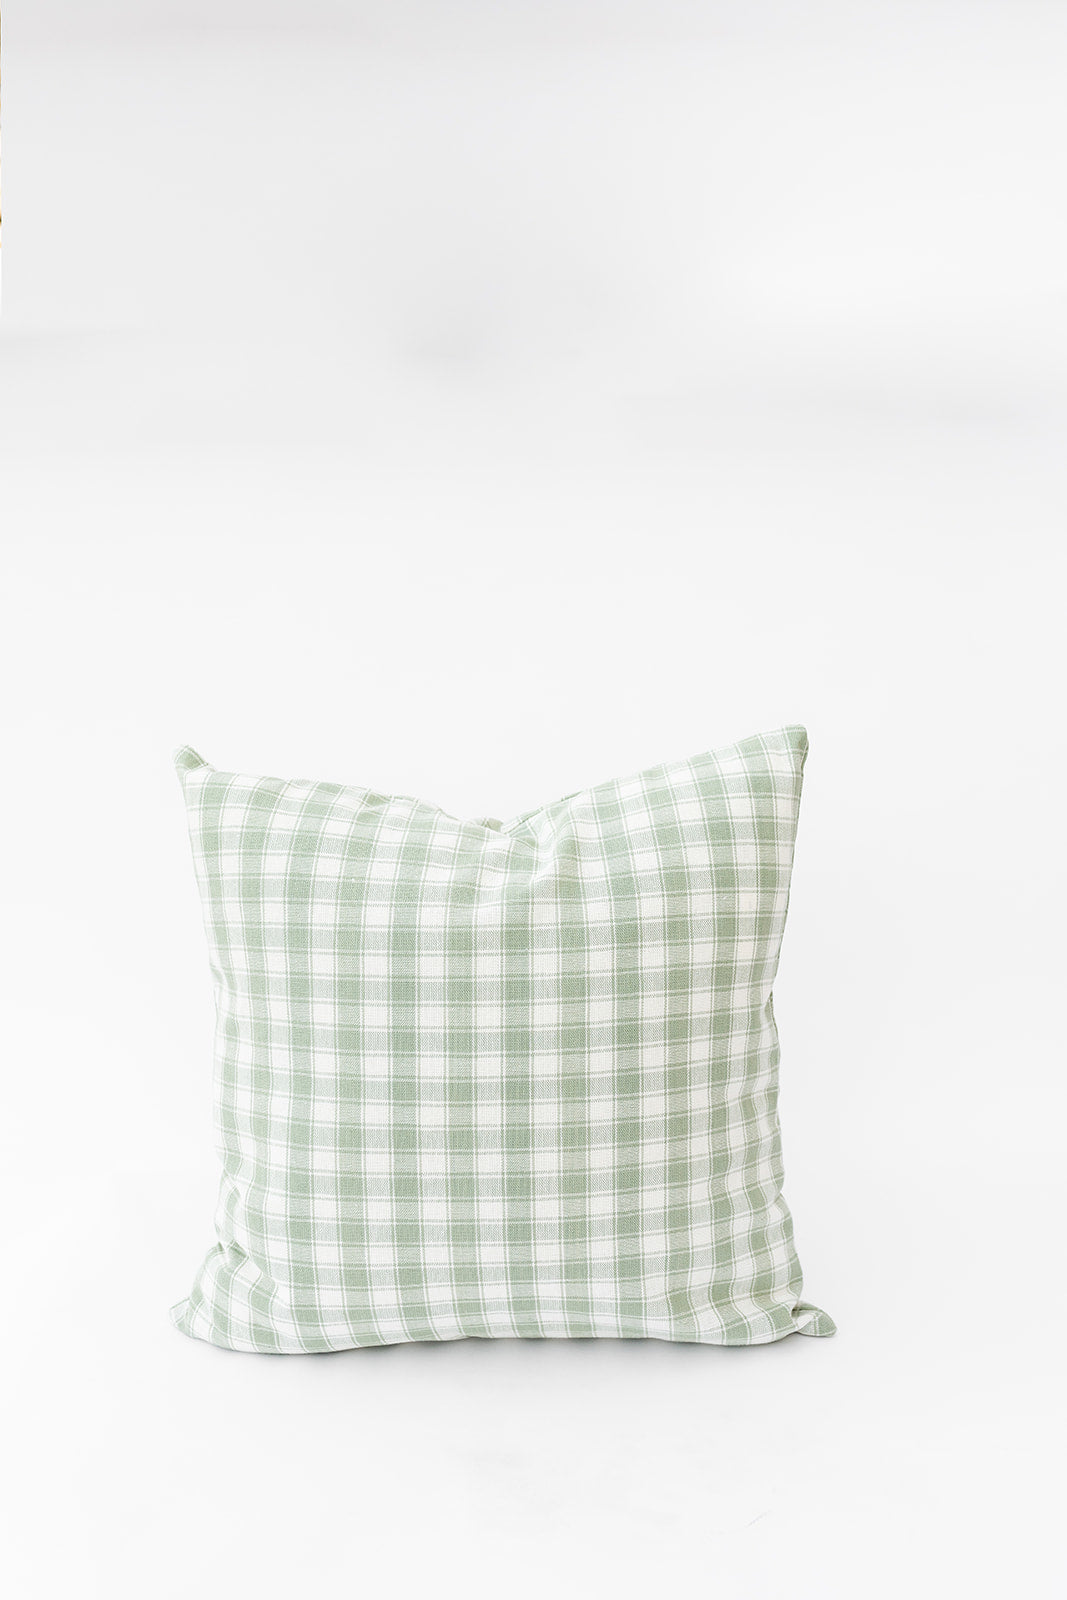 The Homespun Gingham Pillow Cover